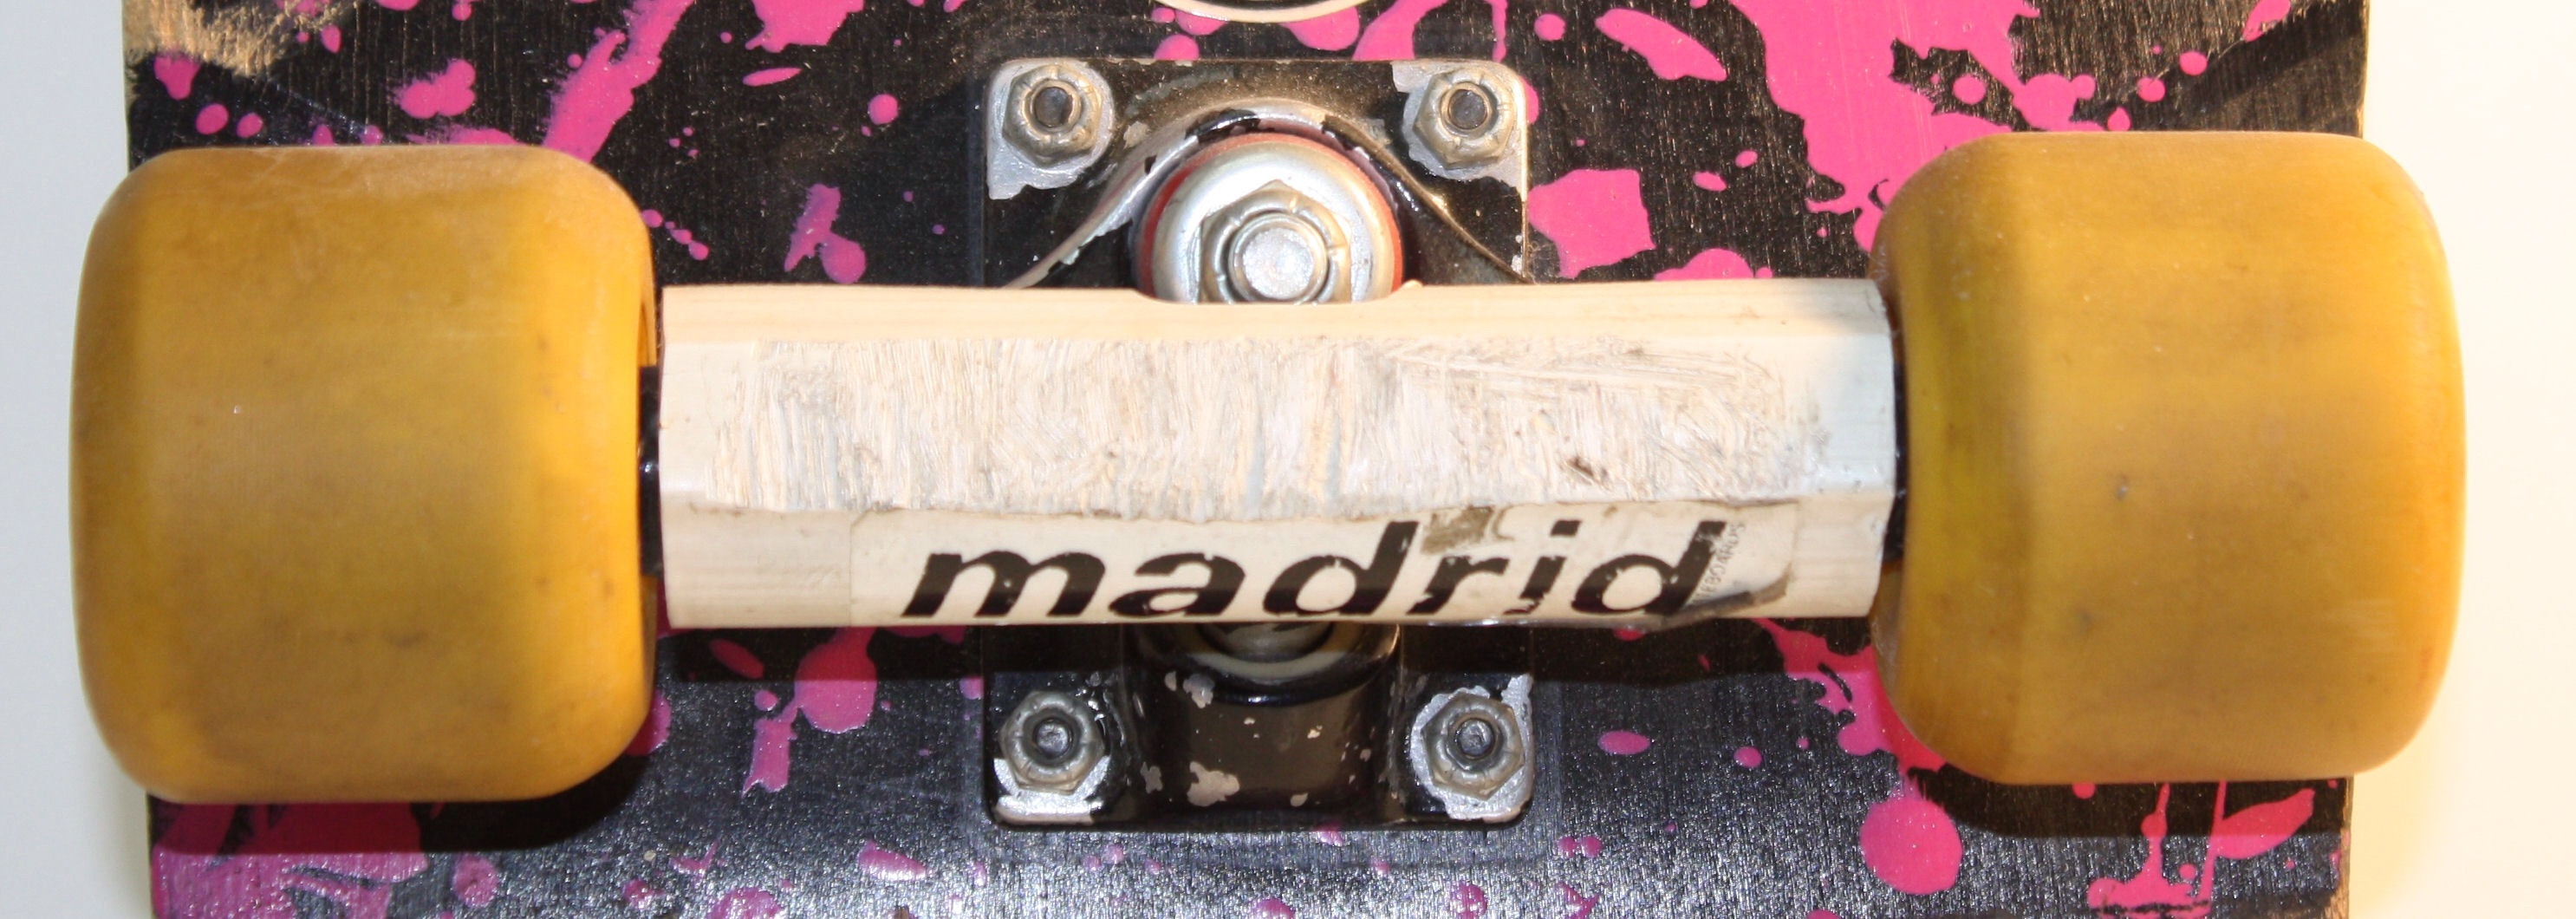 Copers - Madrid - Skateboard Truck Copers